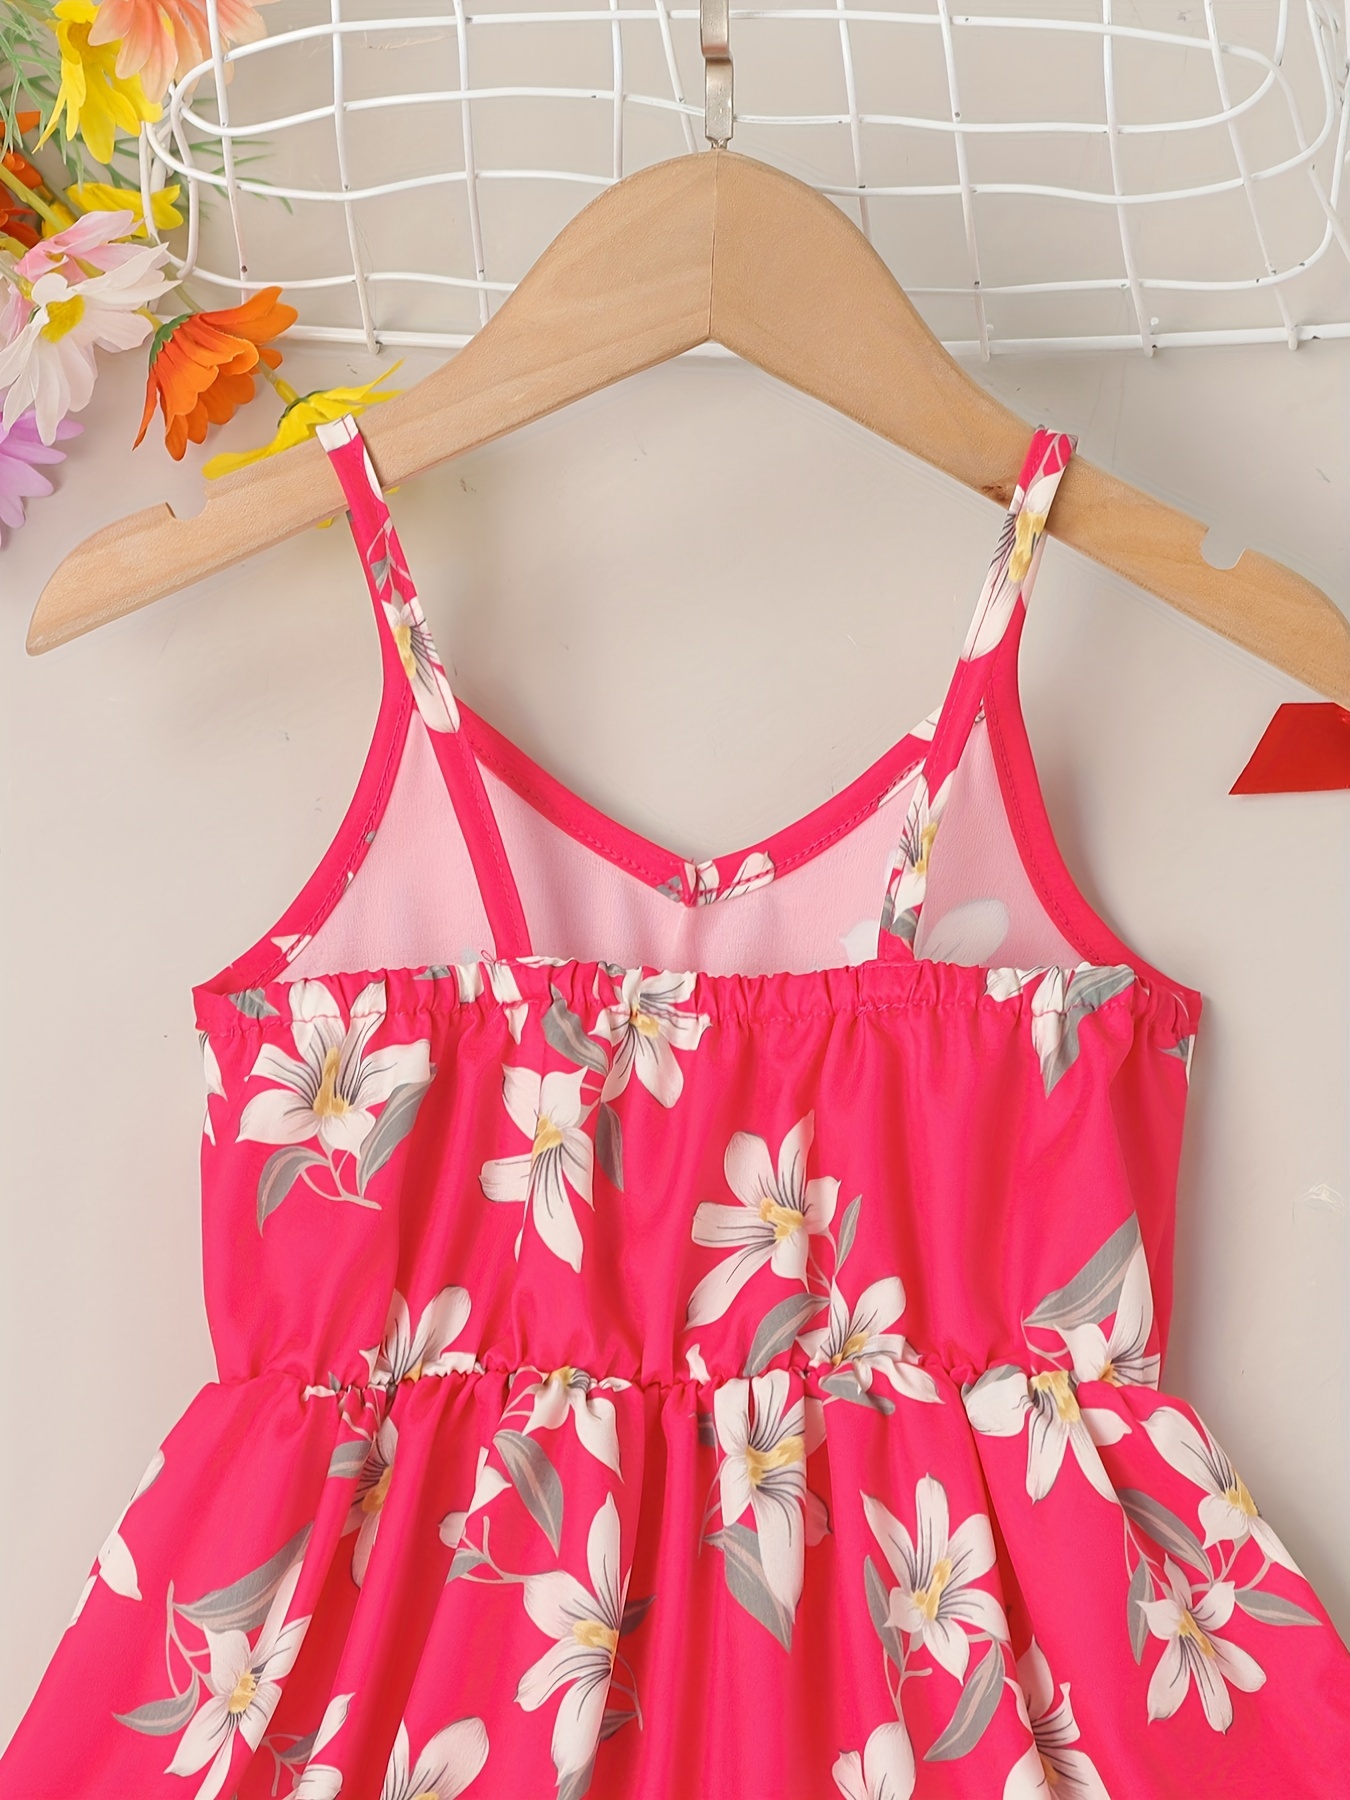 little girls cute sundress floral pattern party beach dress v-neck elastic waist camisole dress for summer rose red 3